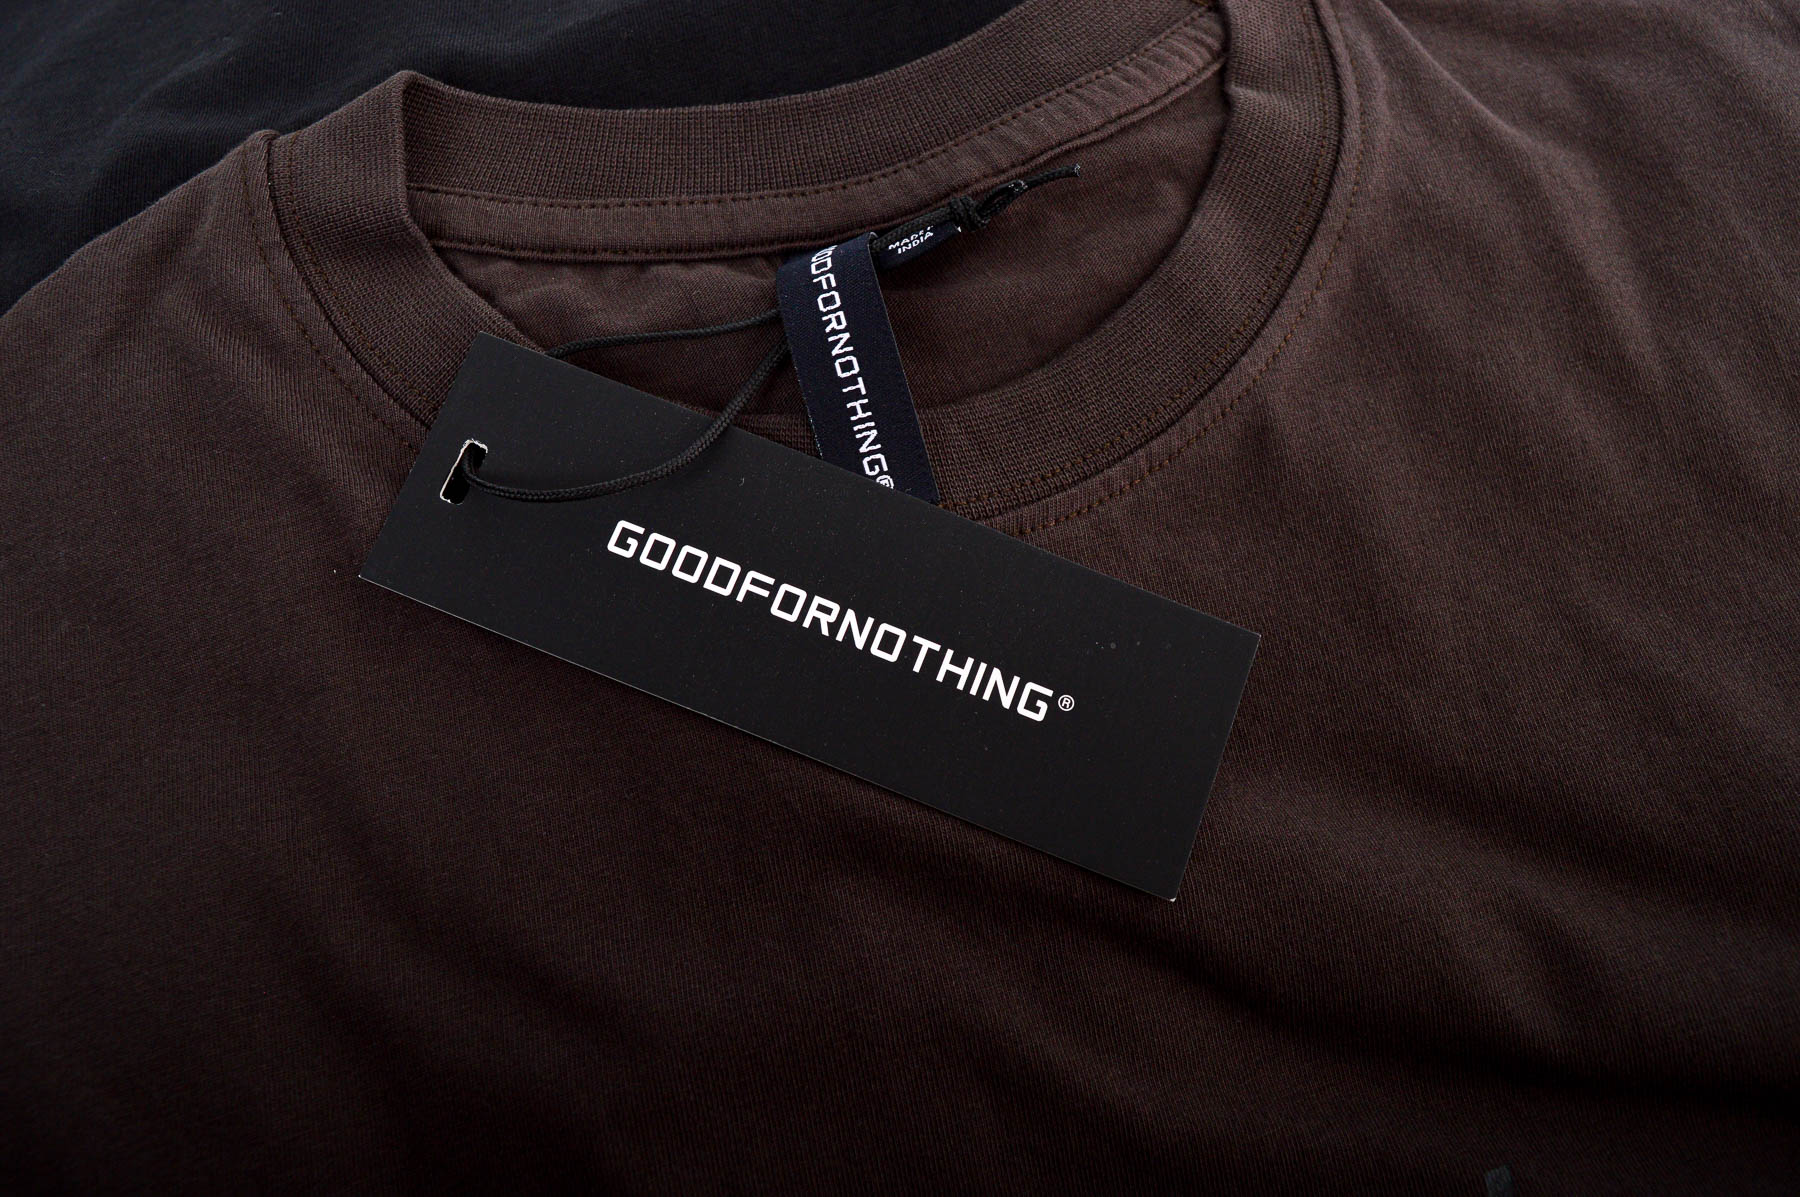 Men's T-shirt - GOODFORNOTHING - 2